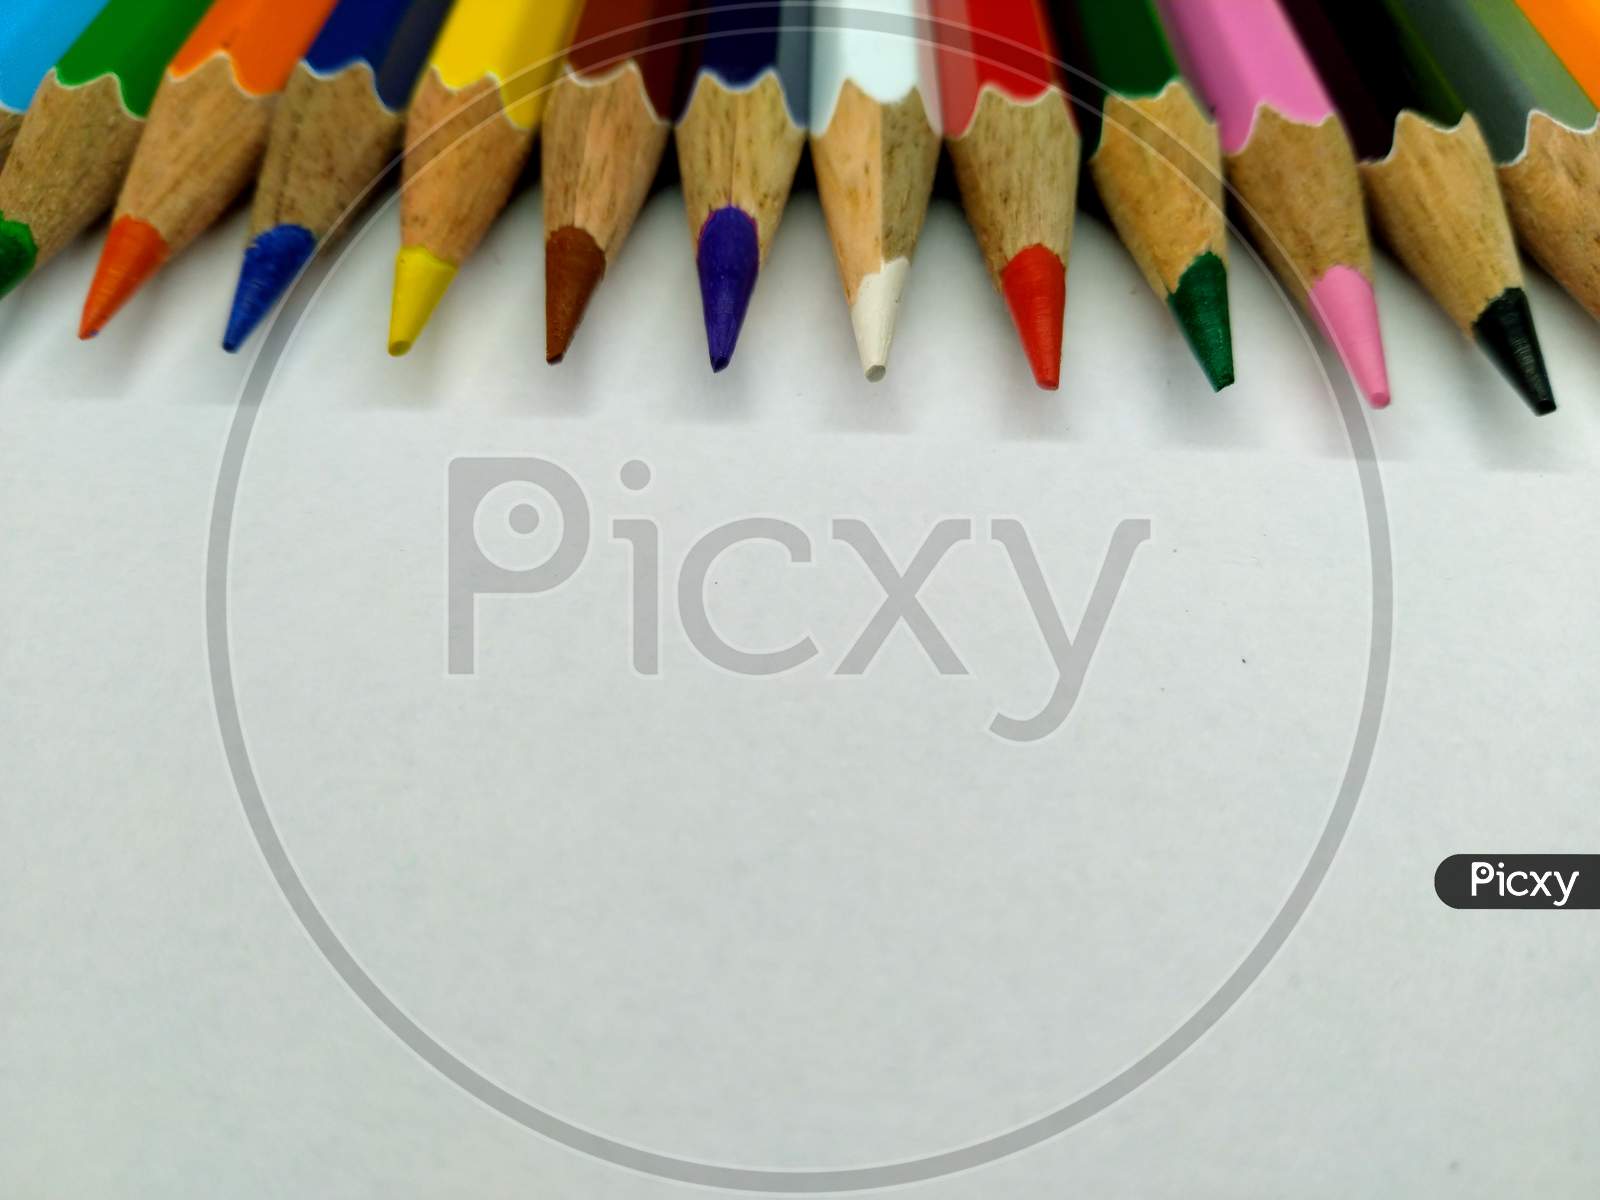 777863 Pencil Sketch Background Images Stock Photos  Vectors   Shutterstock